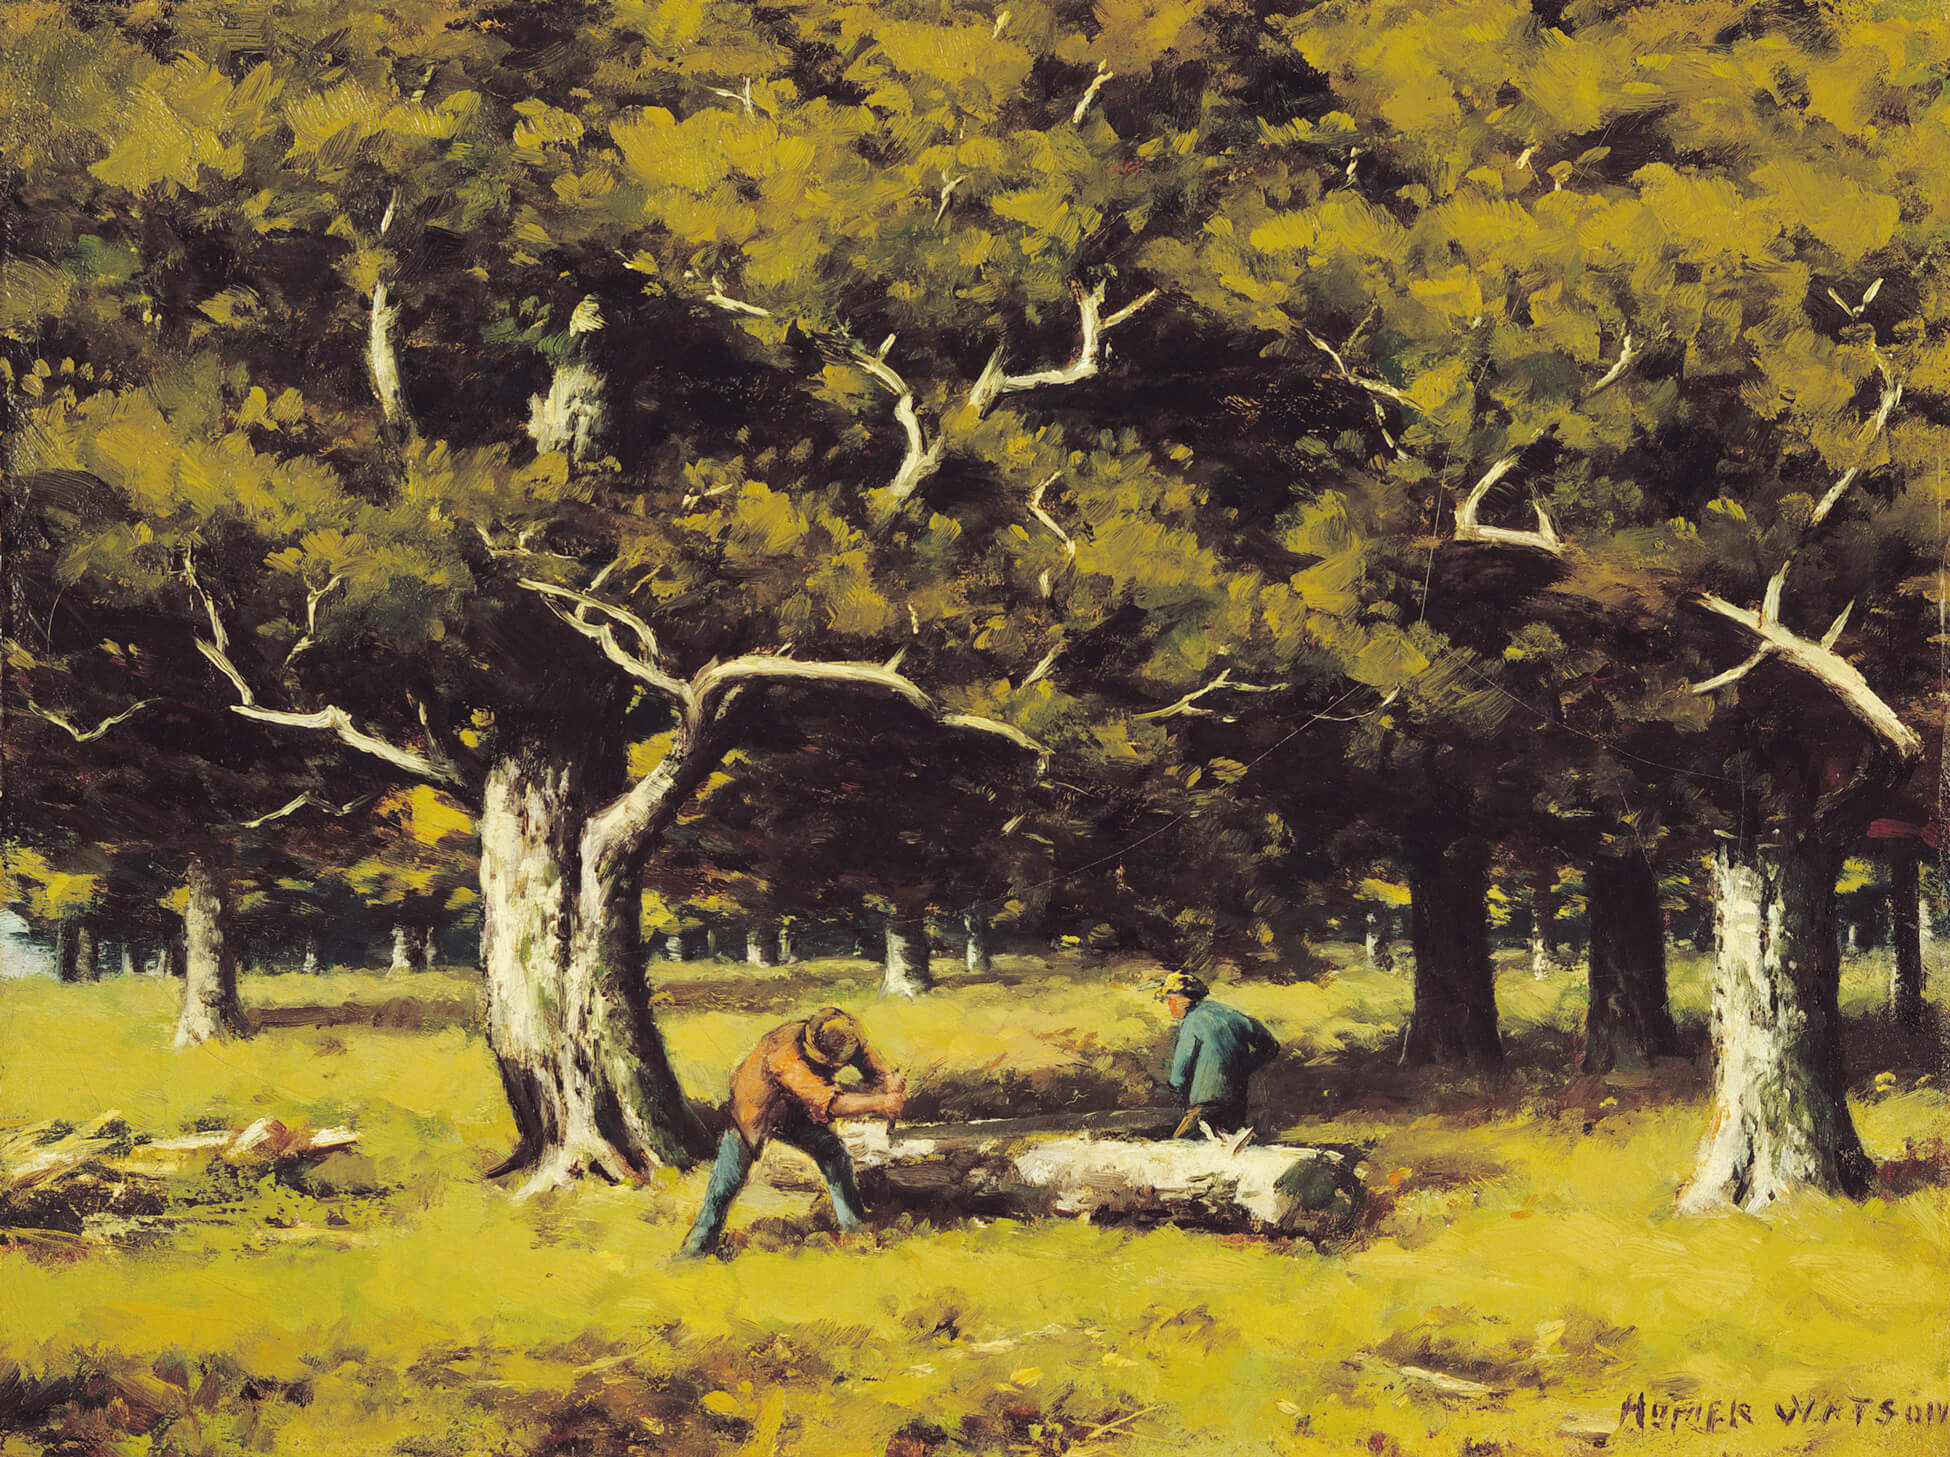 Homer Watson, Log-cutting in the Woods, 1894